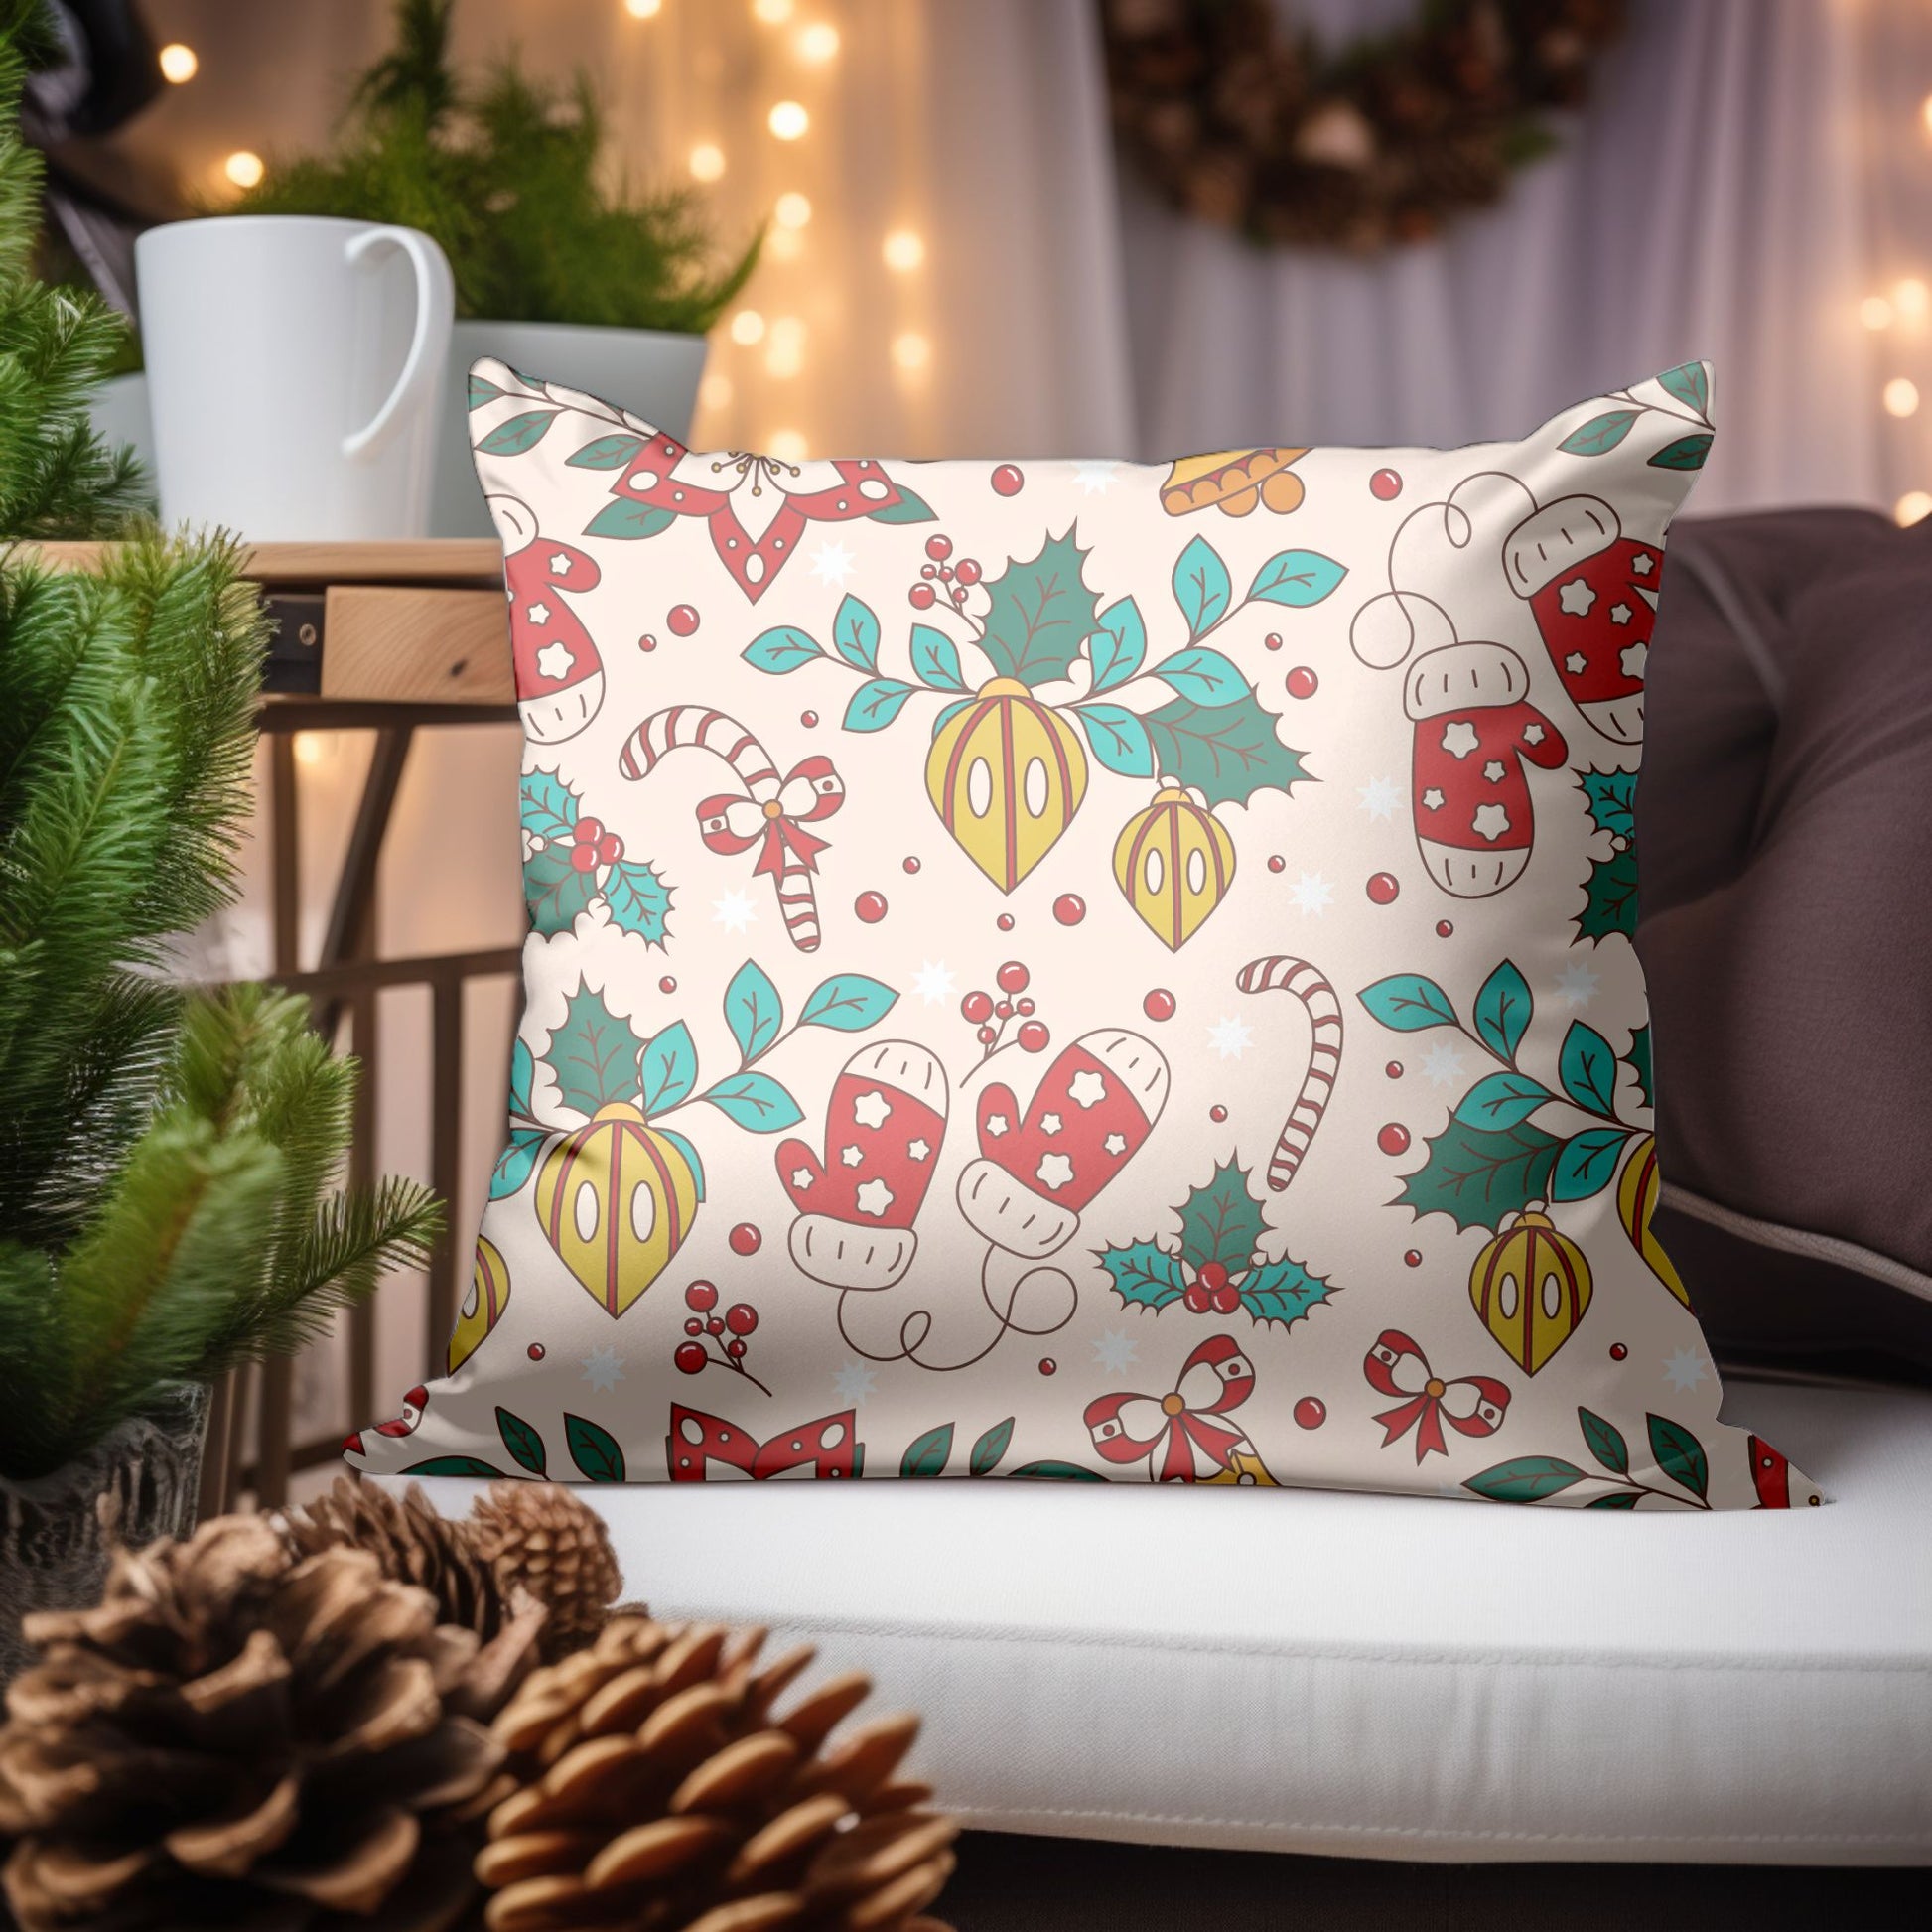 Holiday Theme Pillow with 'Joy' Design